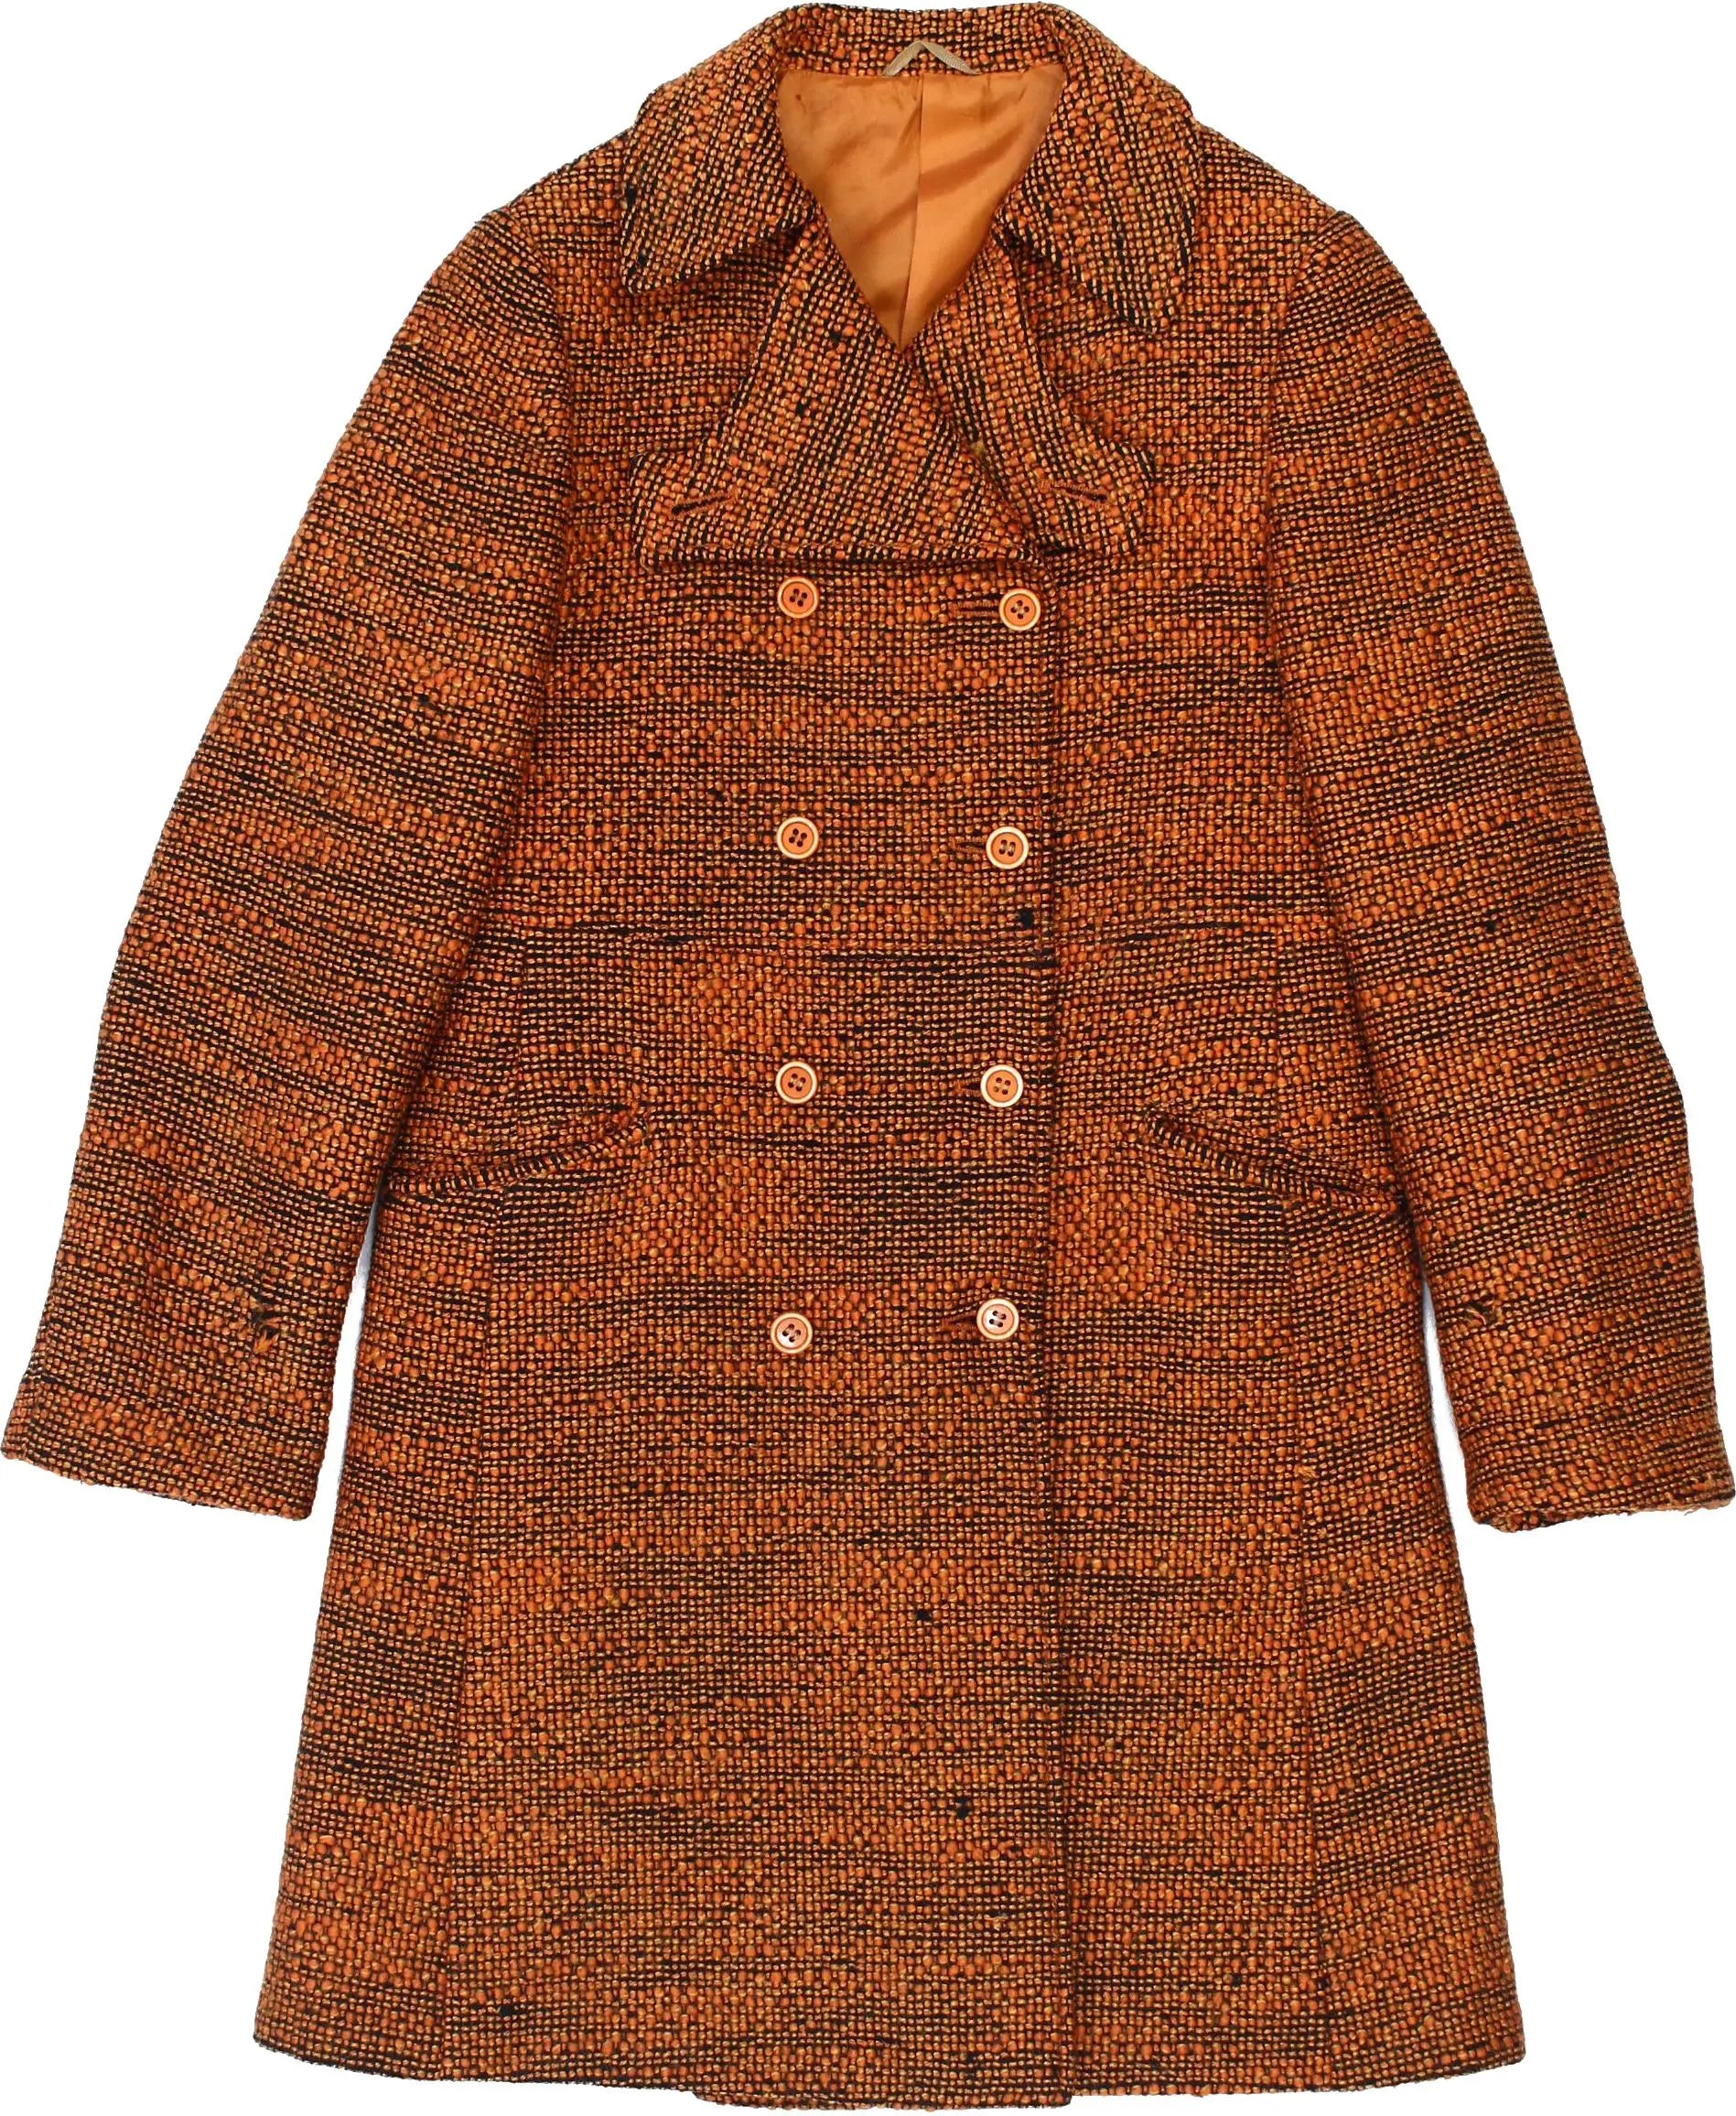 Magni - Orange Coat- ThriftTale.com - Vintage and second handclothing